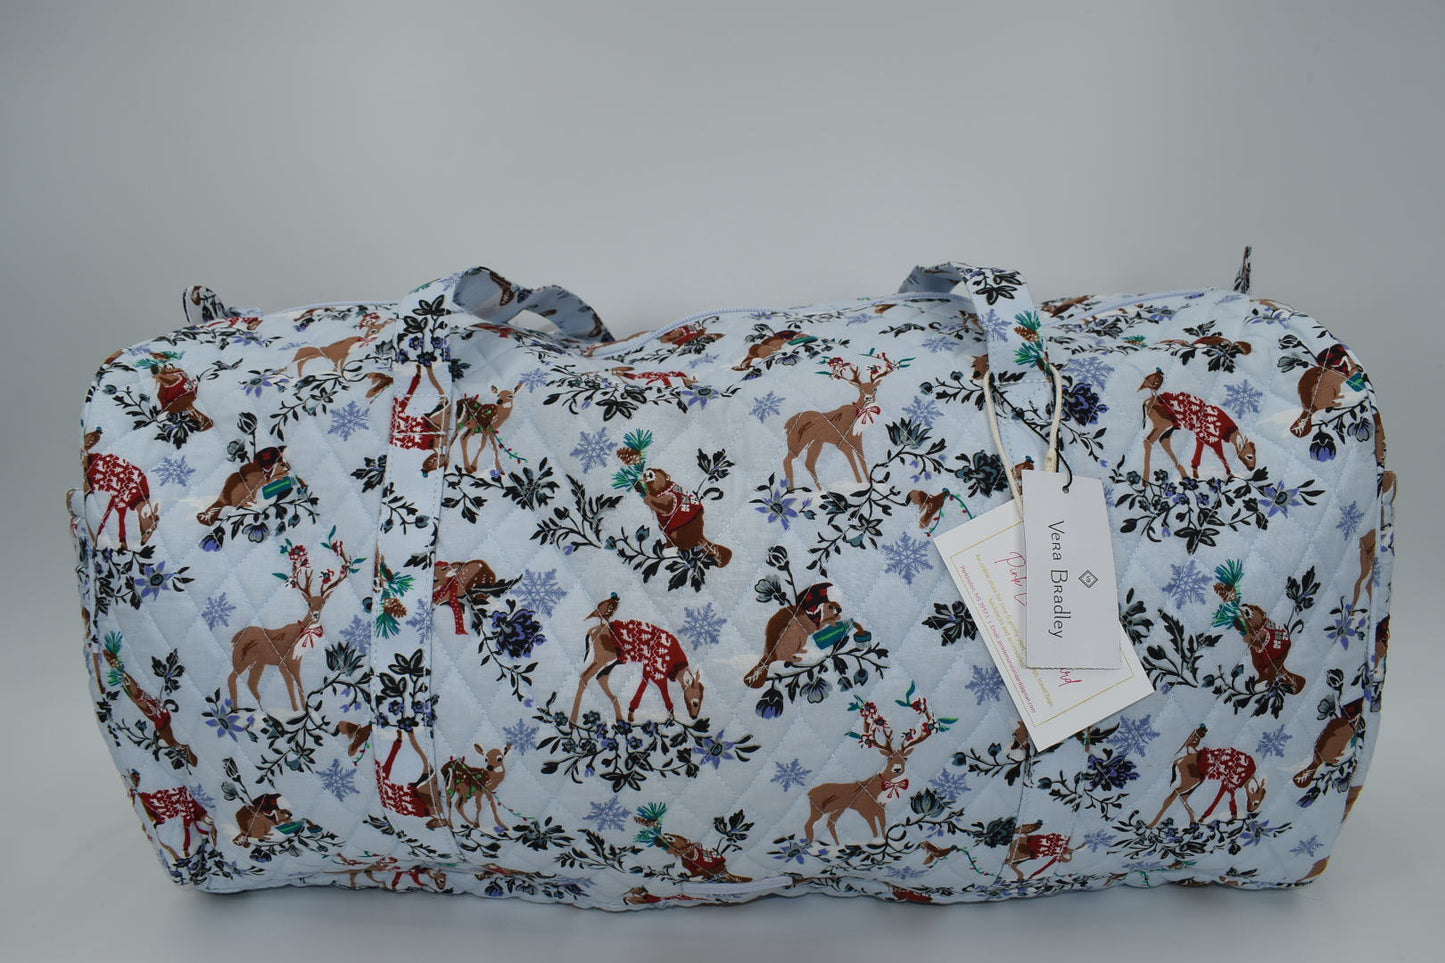 Vera Bradley Large Traveler Duffel Bag in "Merry Mischief" Pattern